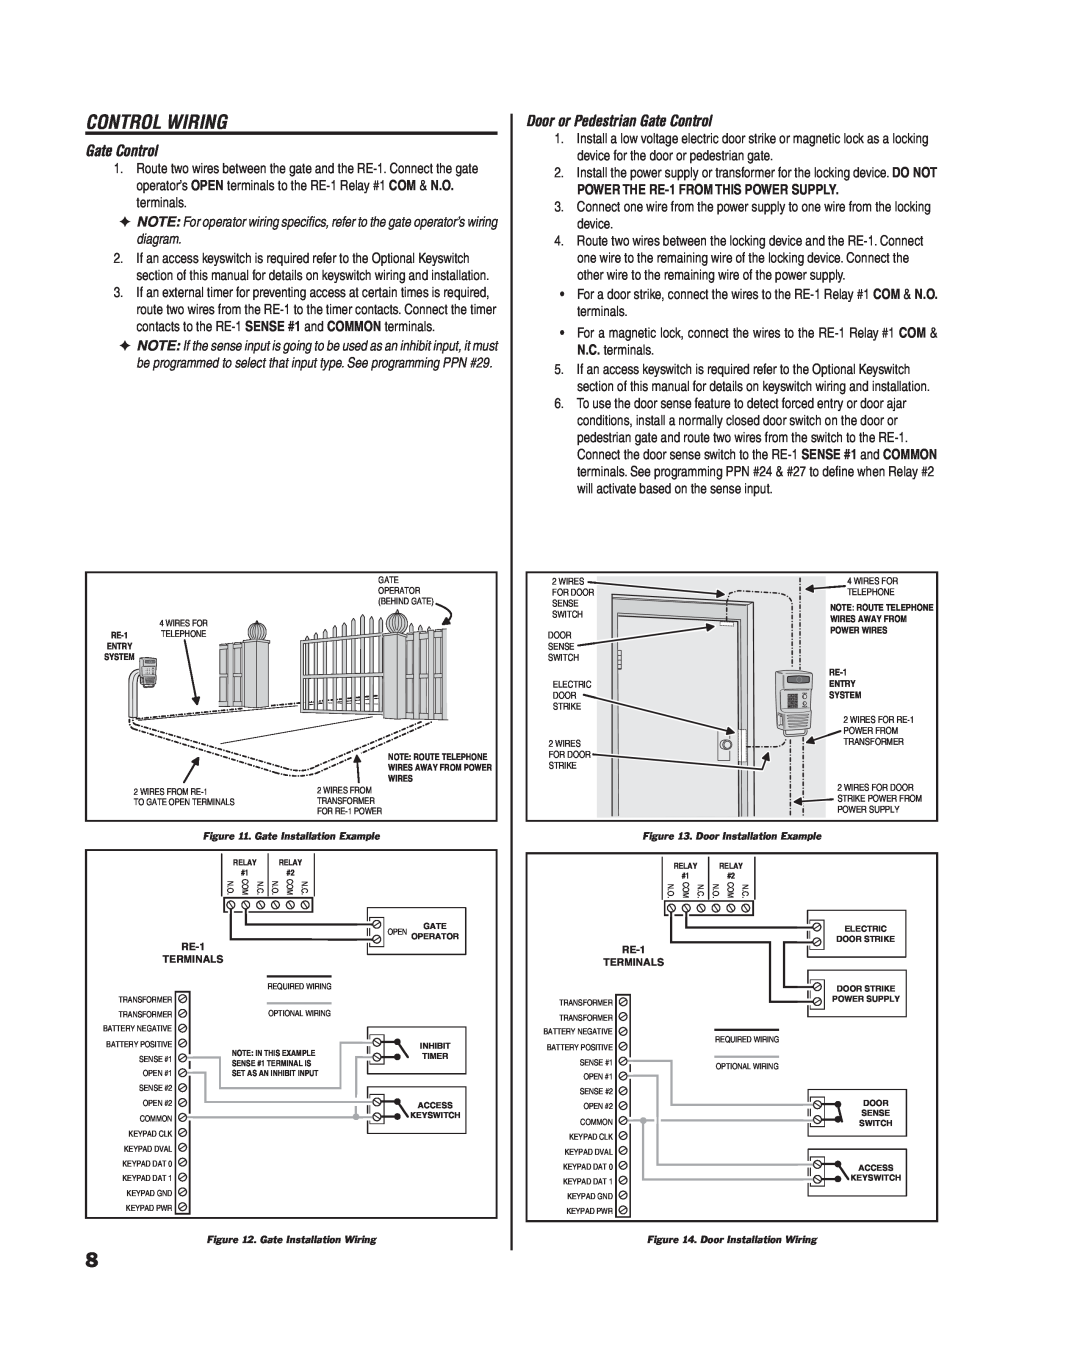 Linear RE-1 manual Control Wiring, Door or Pedestrian Gate Control 